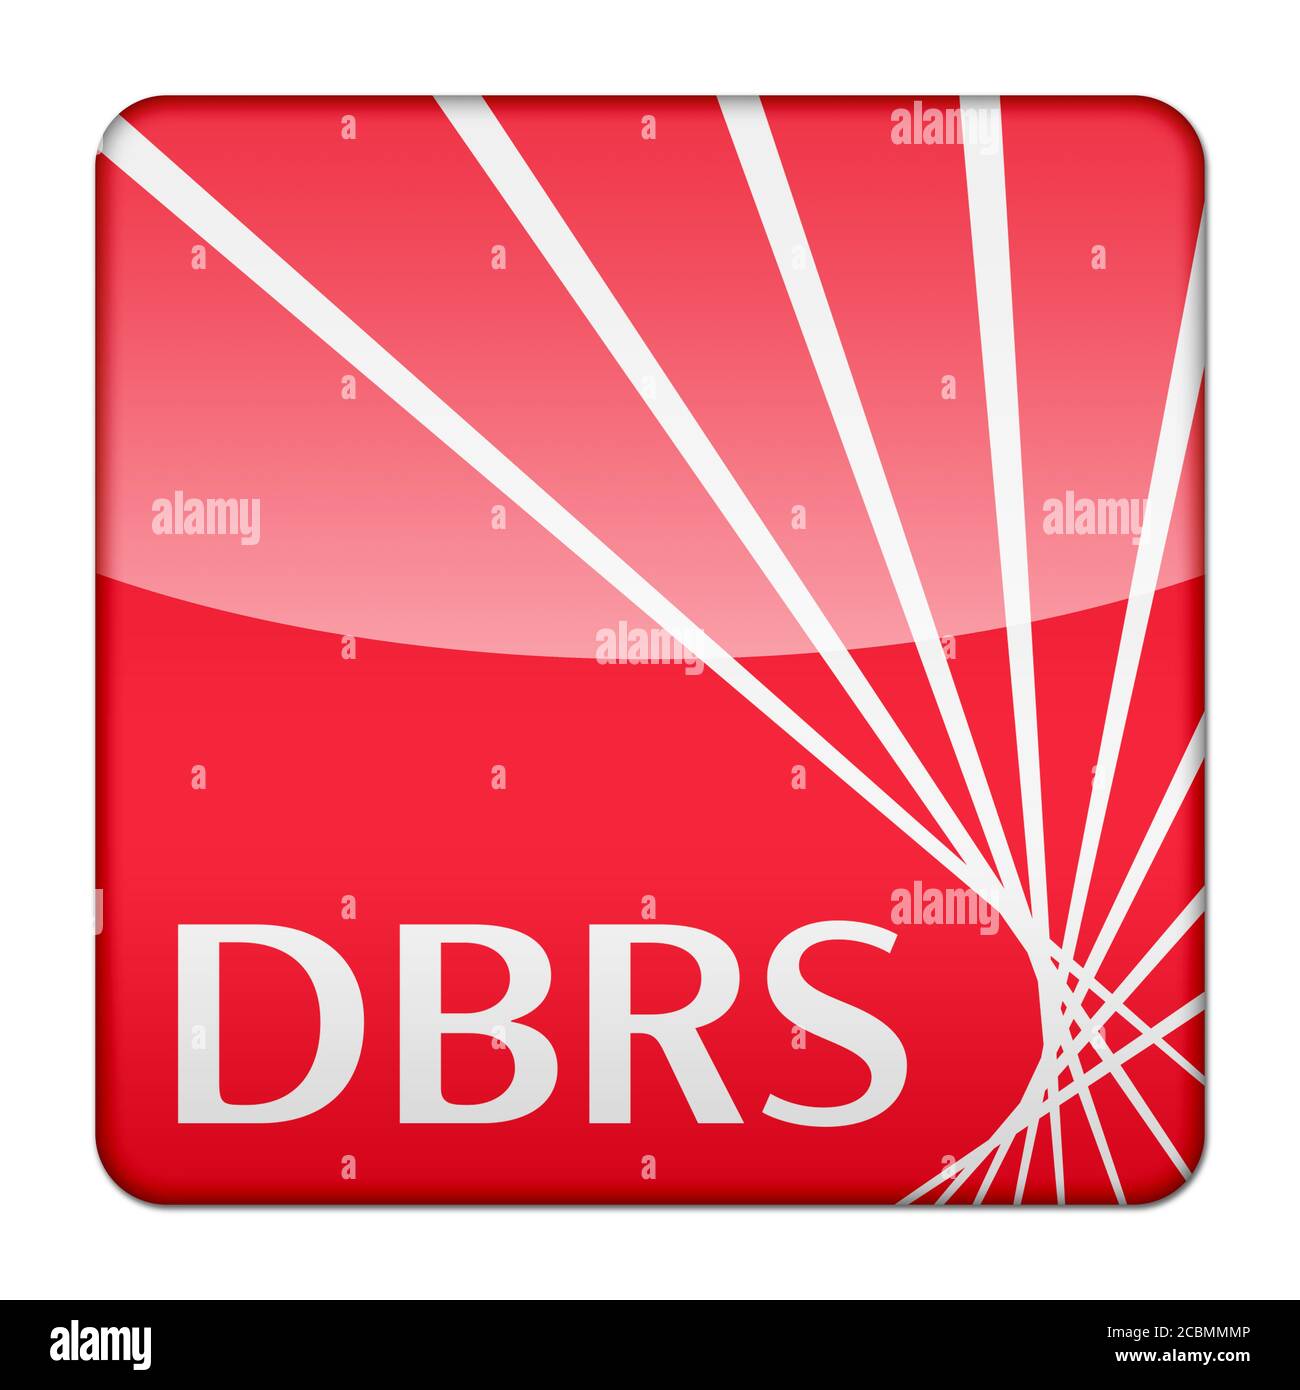 Dominion Bond Rating Service icon logo isolated app button Stock Photo